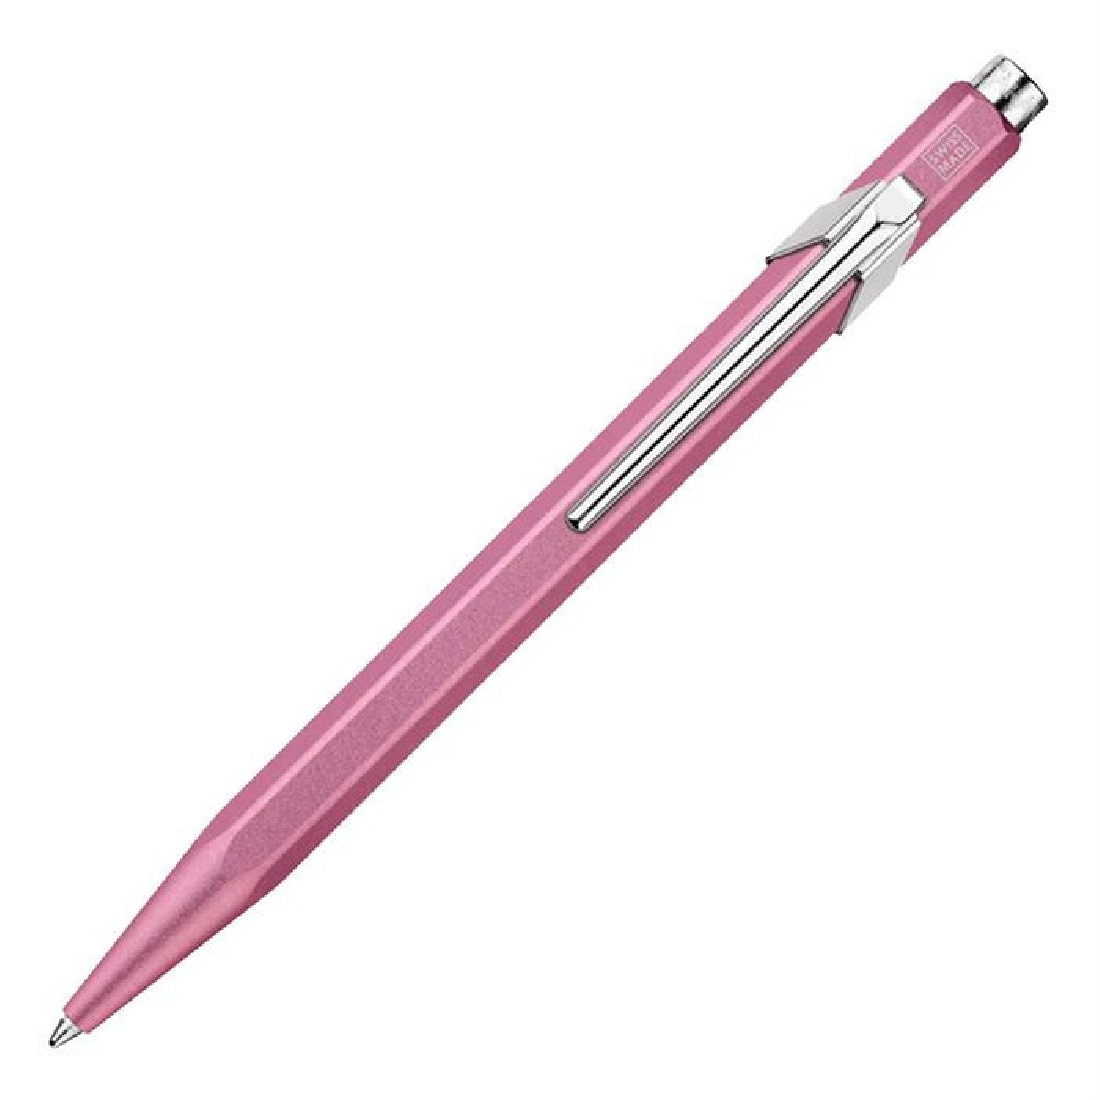 Caran Dache 849 metallic pink ballpoint pen, with slim metal box